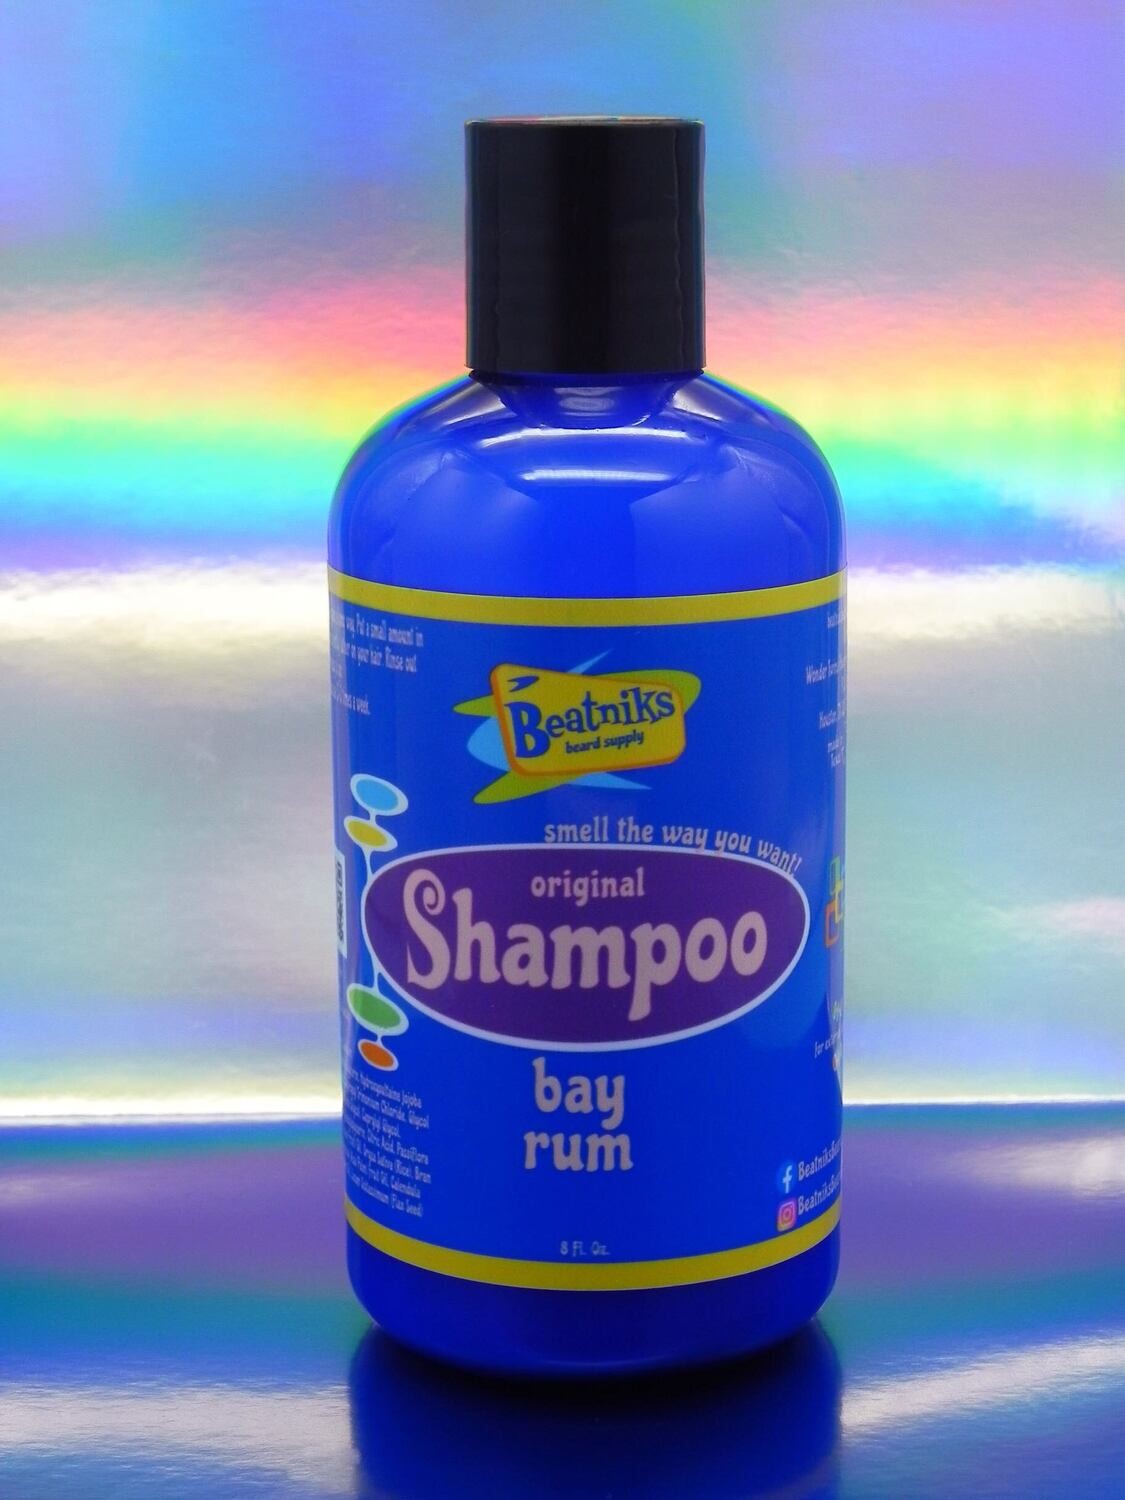 BAY RUM | Shampoo